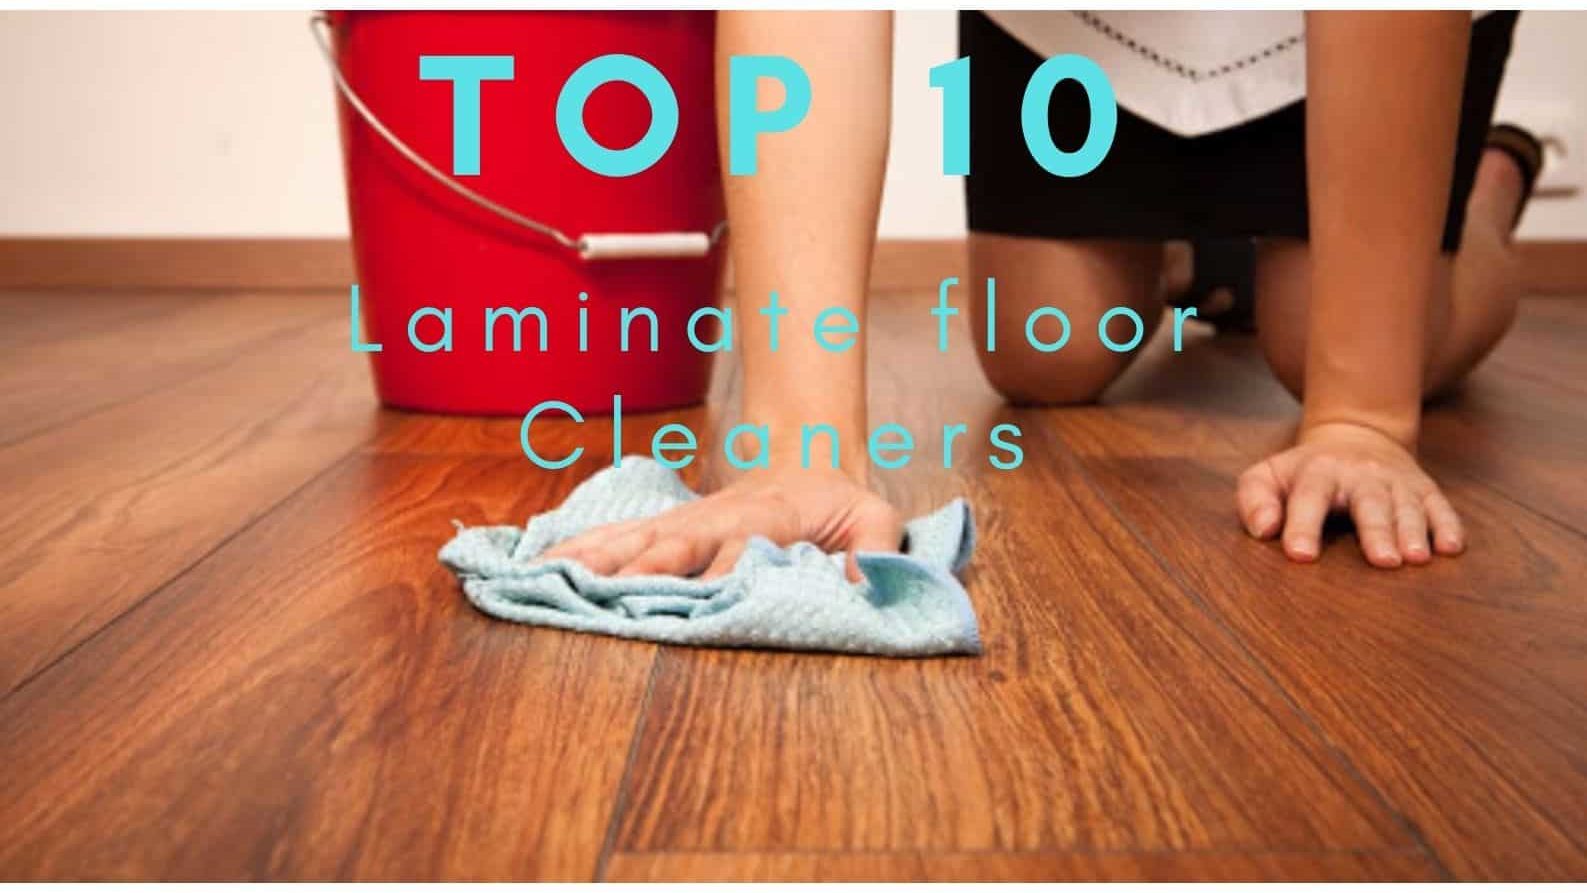 Best Laminate Floor Cleaners